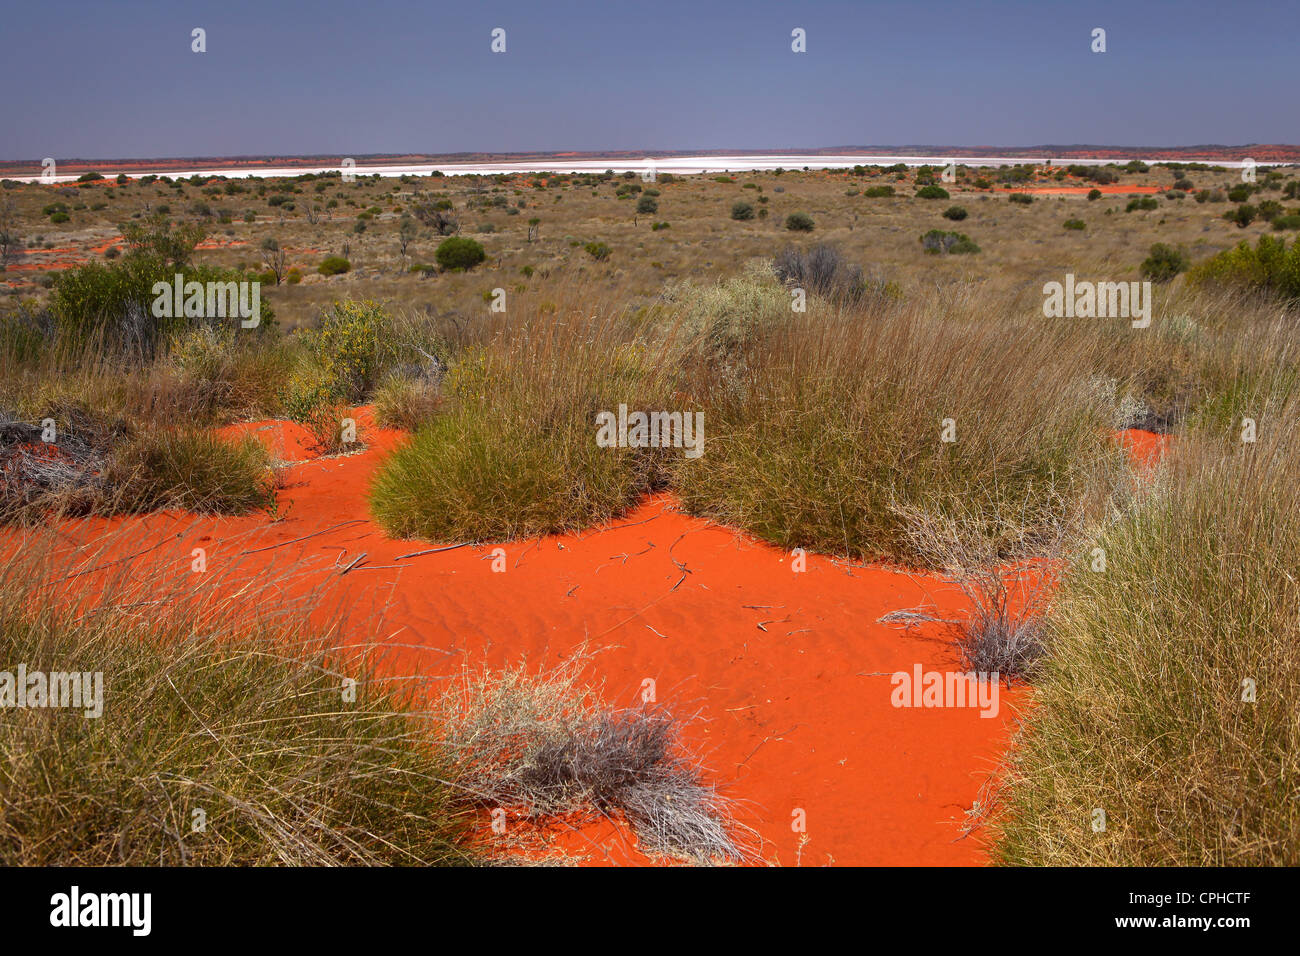 Salz, See, Salz, Outback, Wüste, Steppe, Rasen, roter Sand, Sand, rot,  Uluru, Northern Territory, Australien Stockfotografie - Alamy